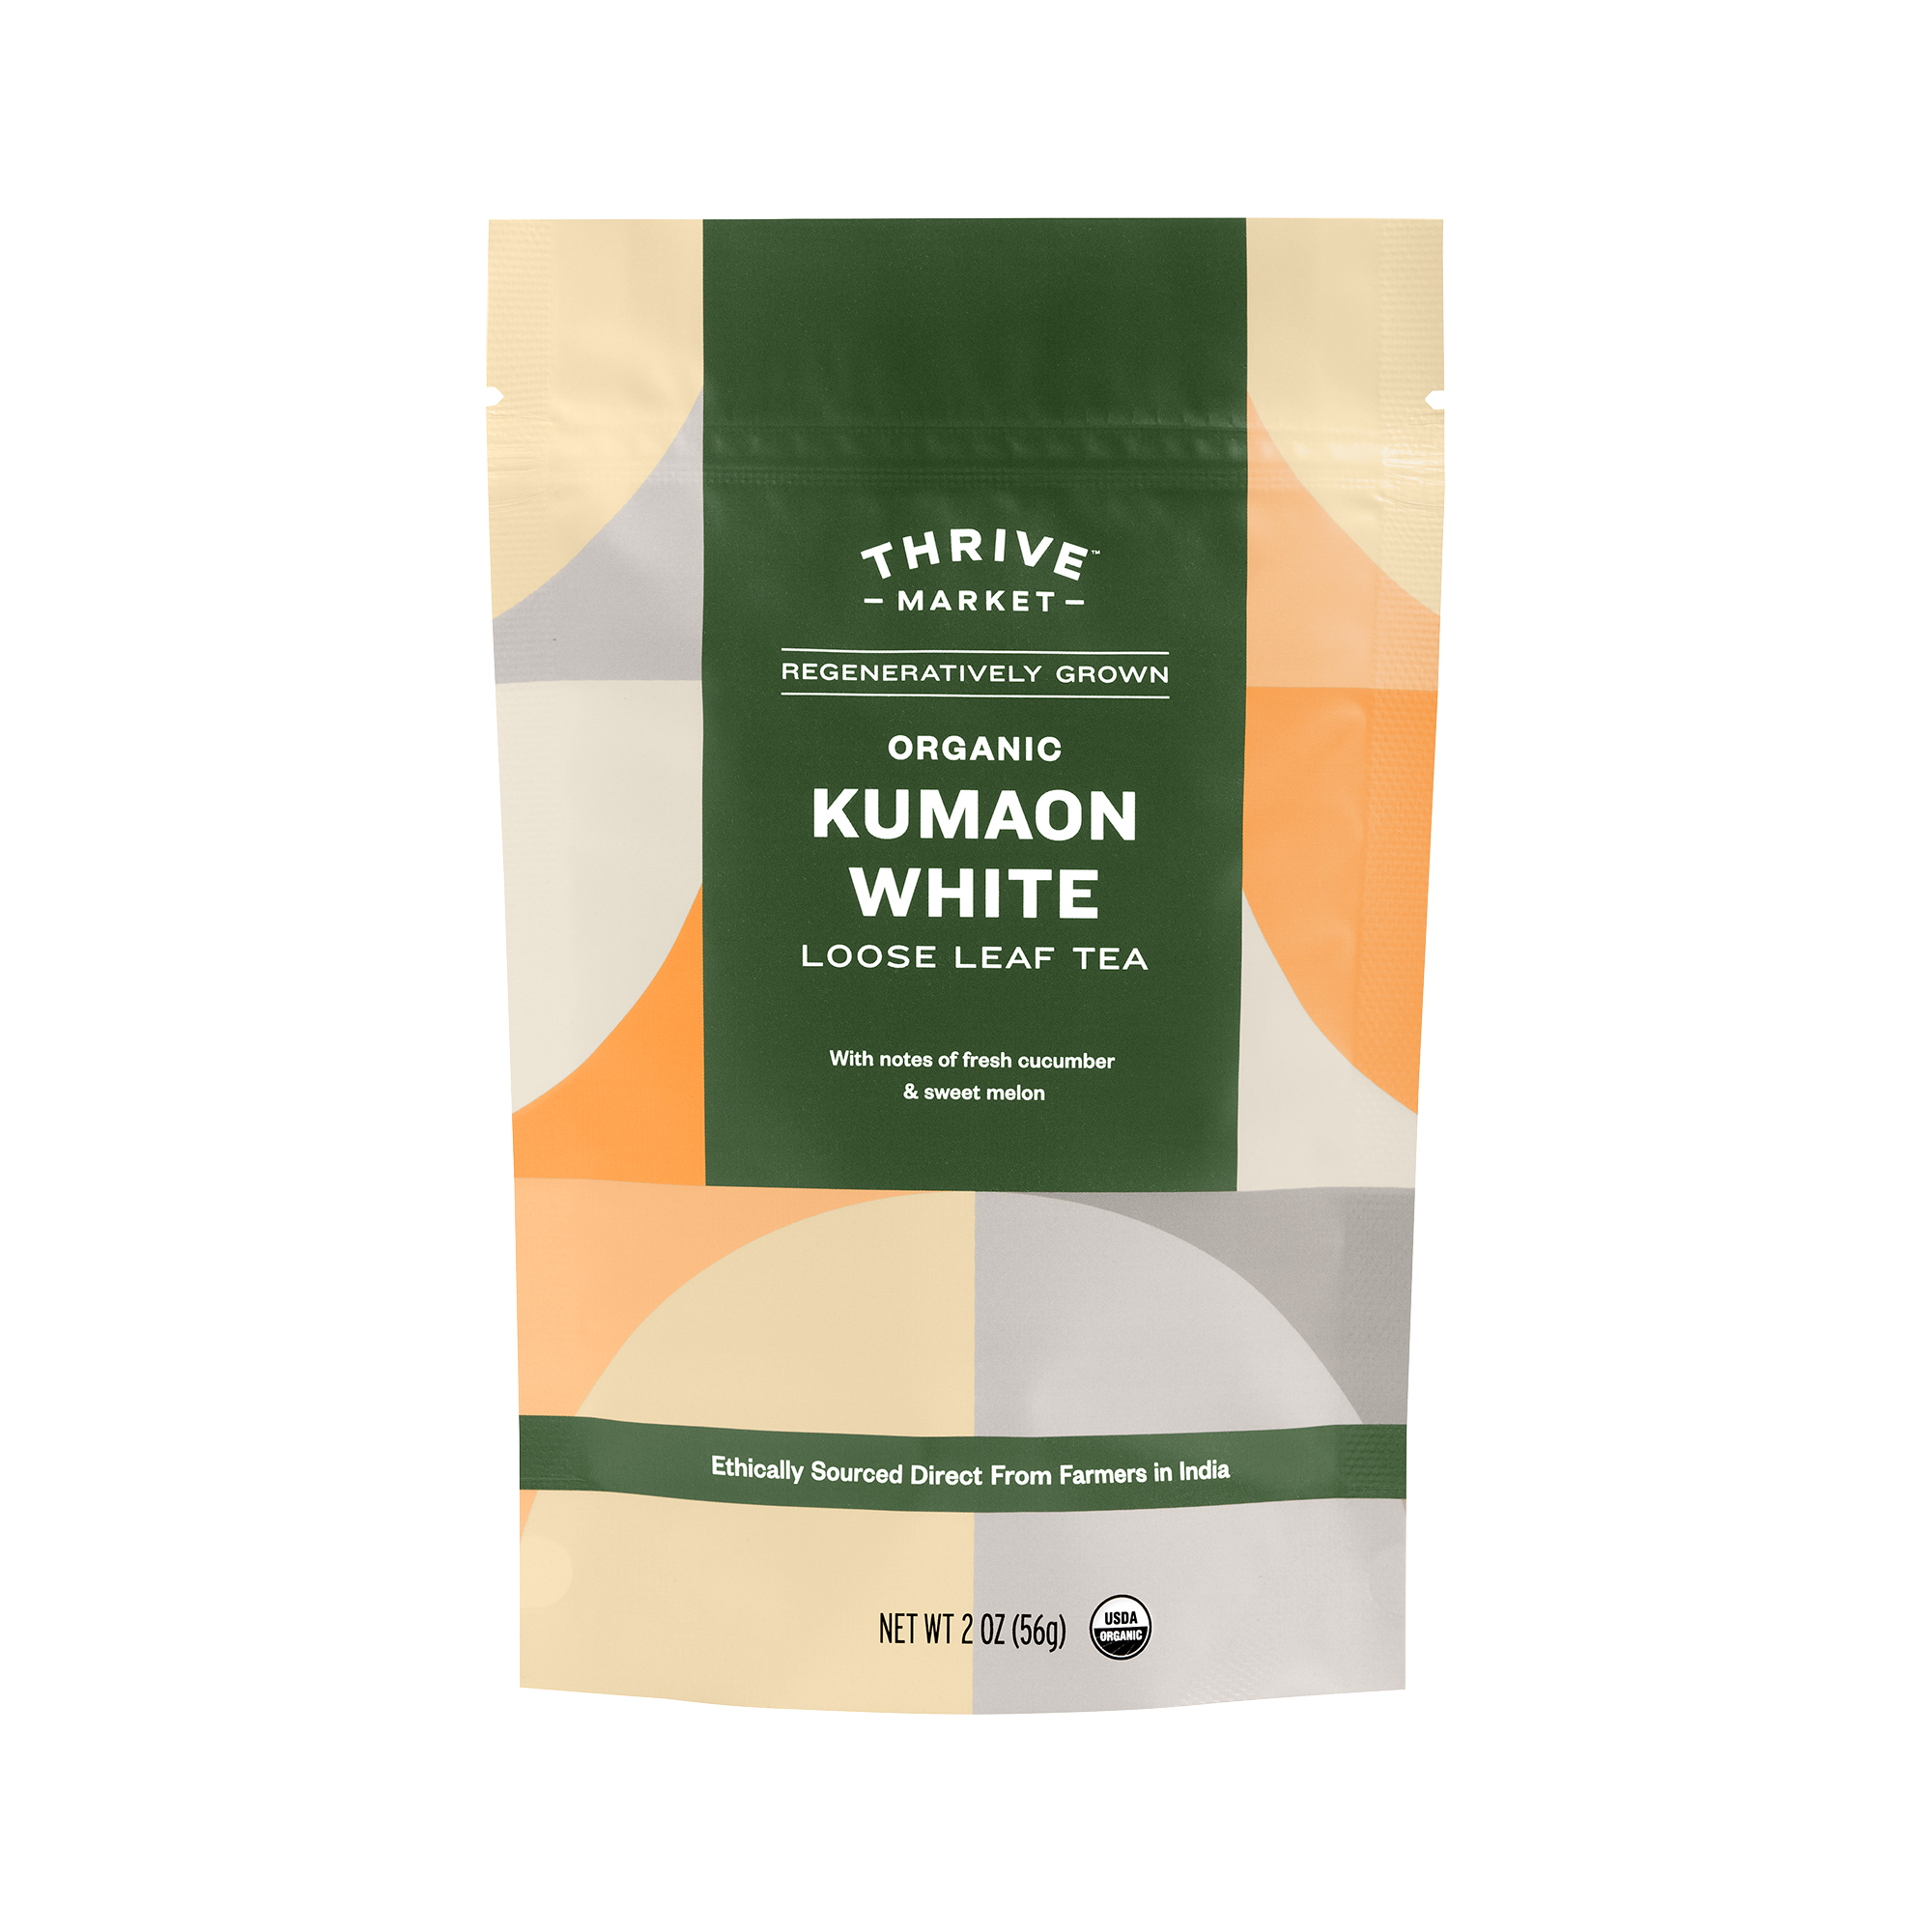 Thrive Market Regeneratively Grown Organic Kumaon White Loose Leaf Tea 2 oz pouch